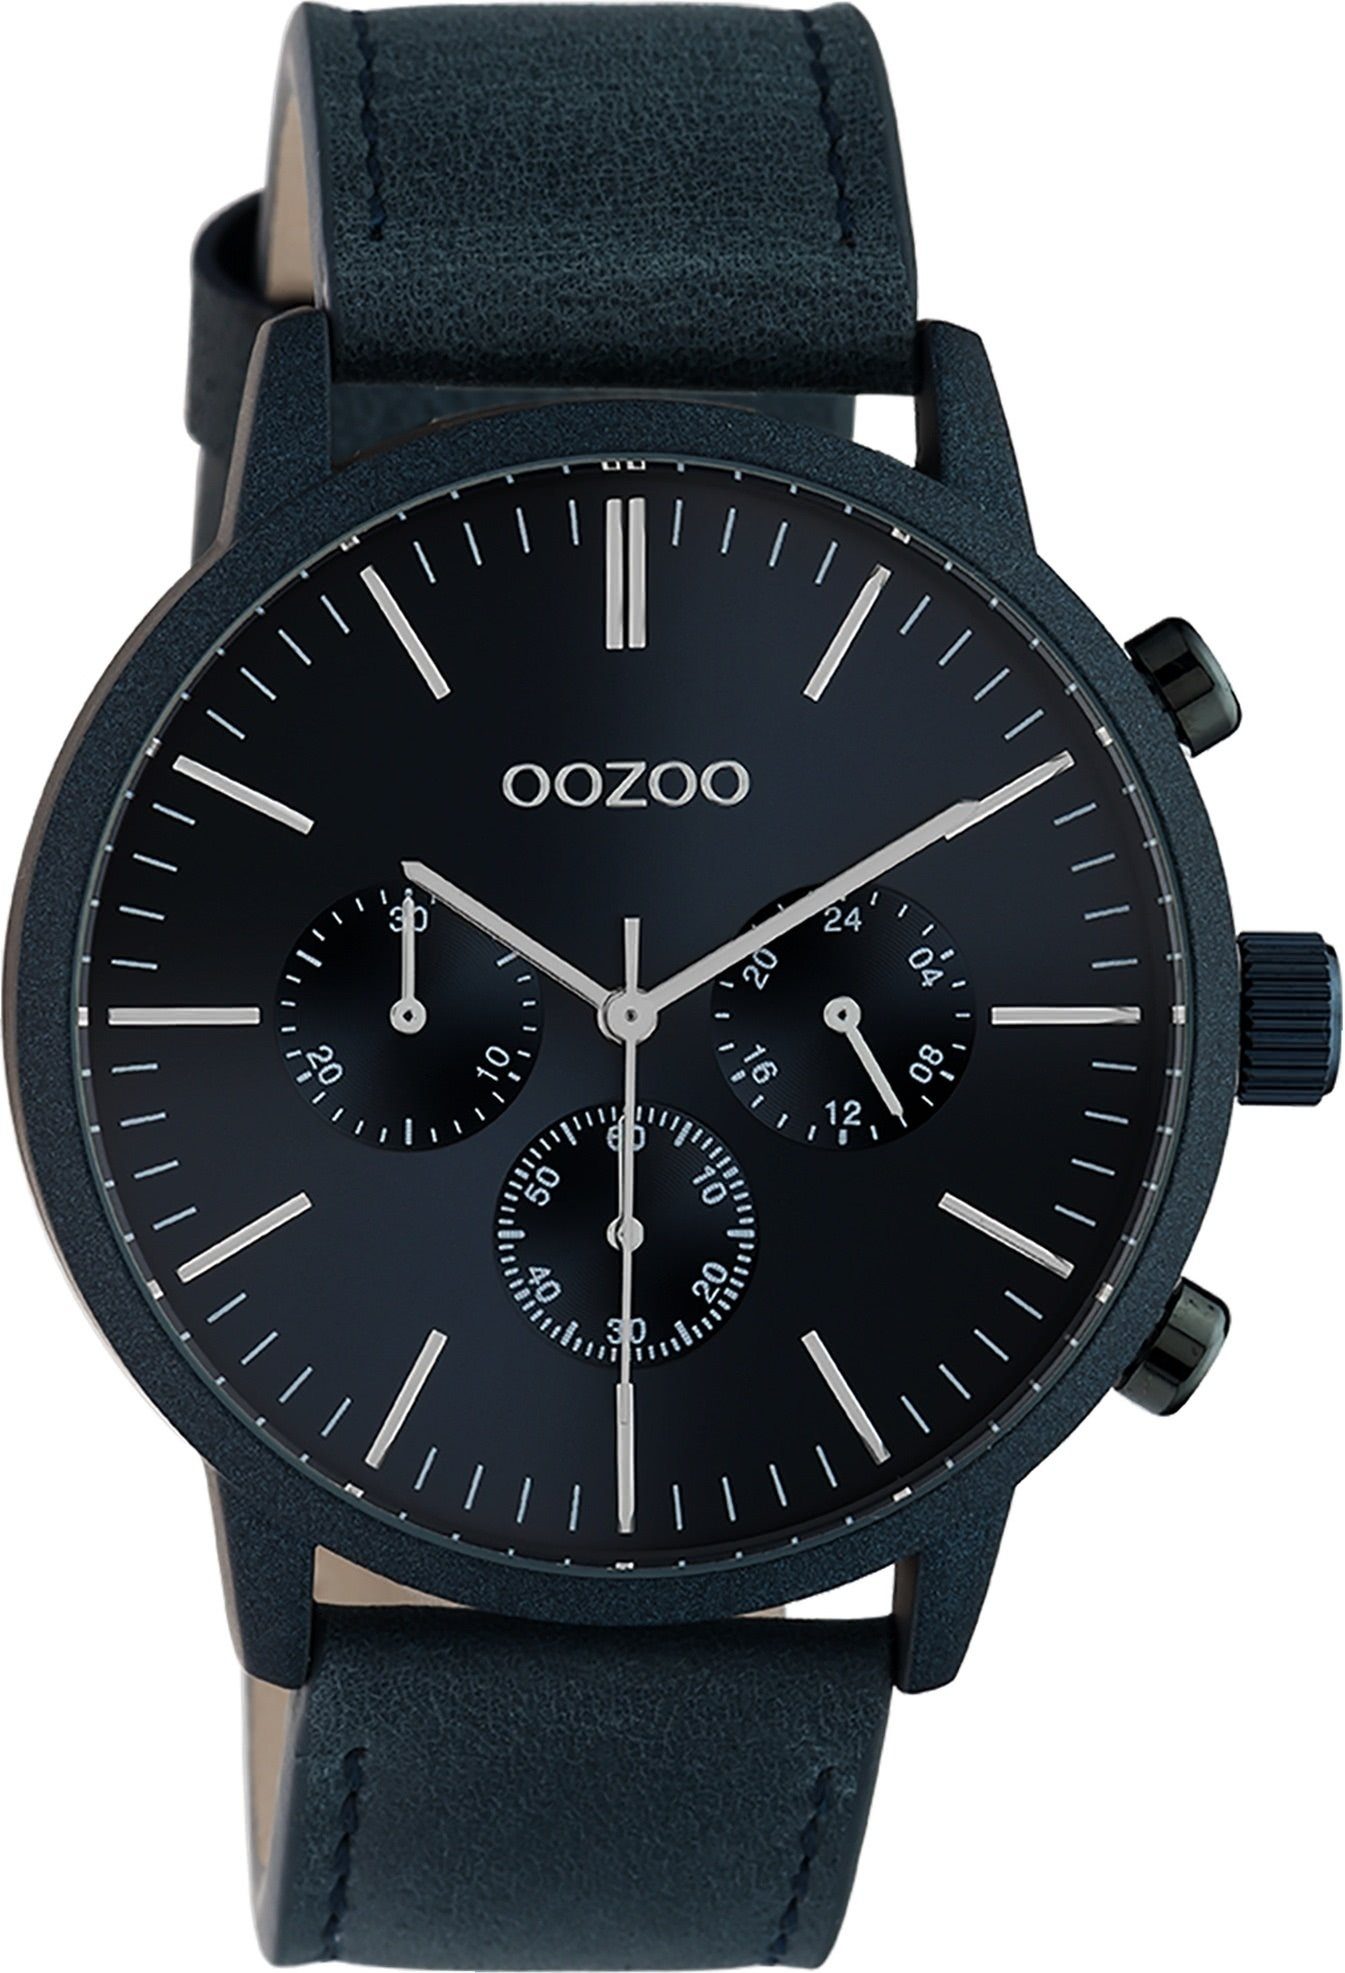 OOZOO Quarzuhr Oozoo Unisex Armbanduhr dunkelblau Analog, Damen, Herrenuhr rund, groß (ca. 45mm) Lederarmband, Casual-Style